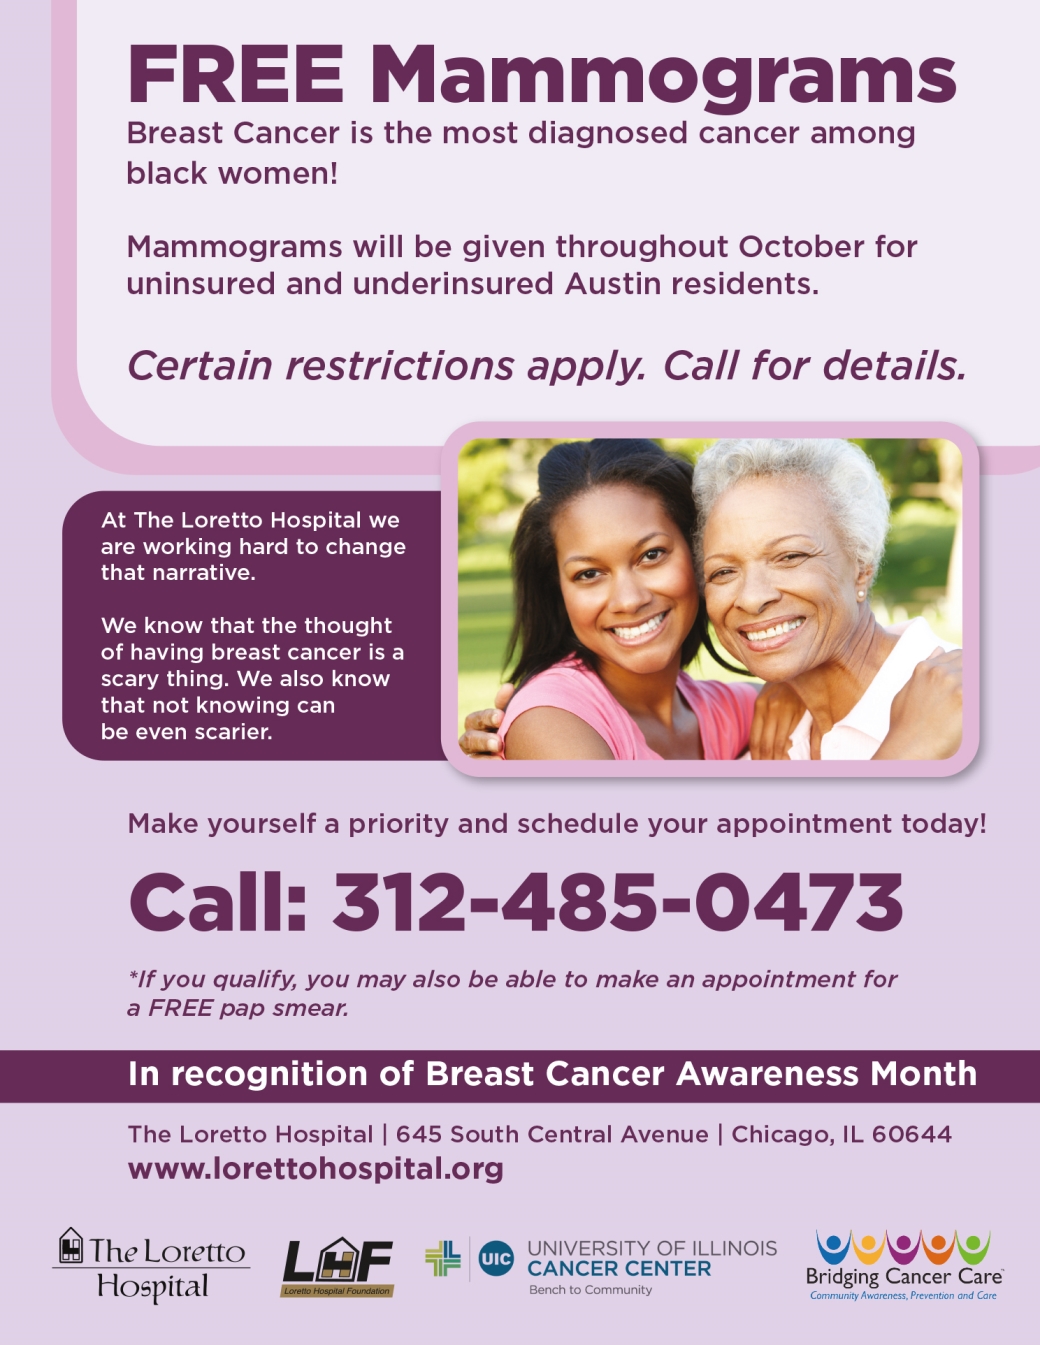 Free Mammograms in October. Call 833-THL-LOVE